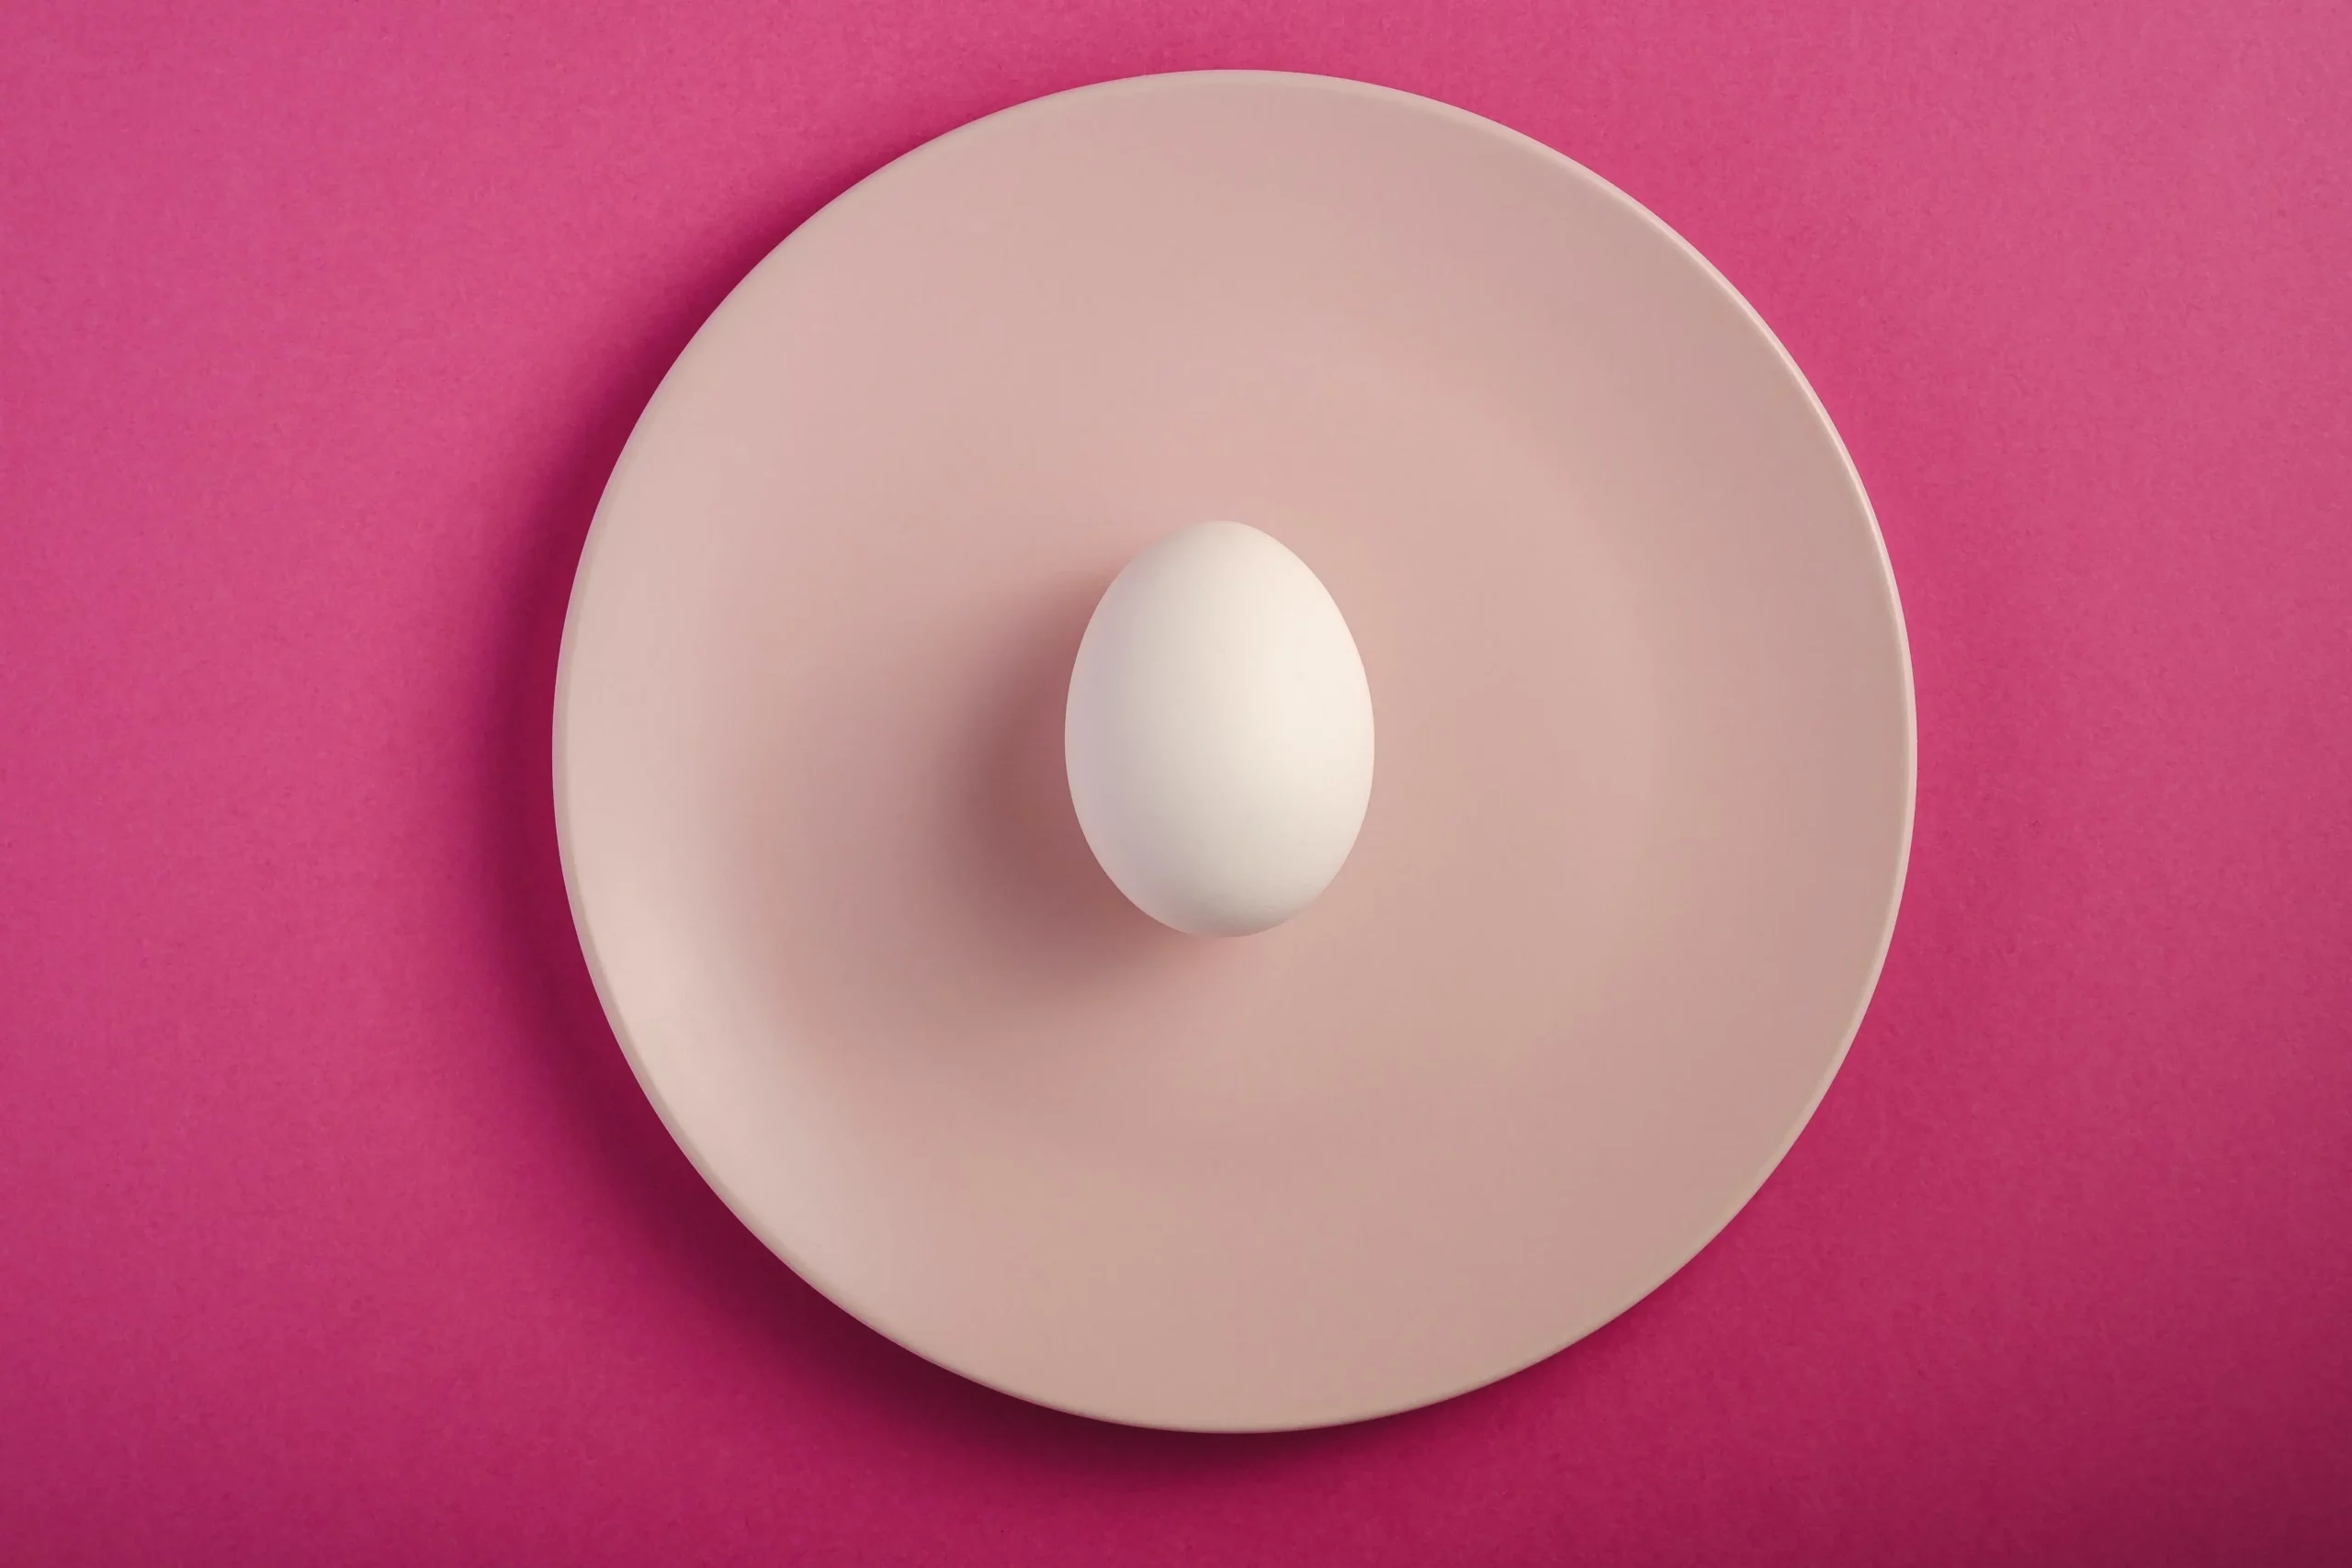 Single egg on pink plate